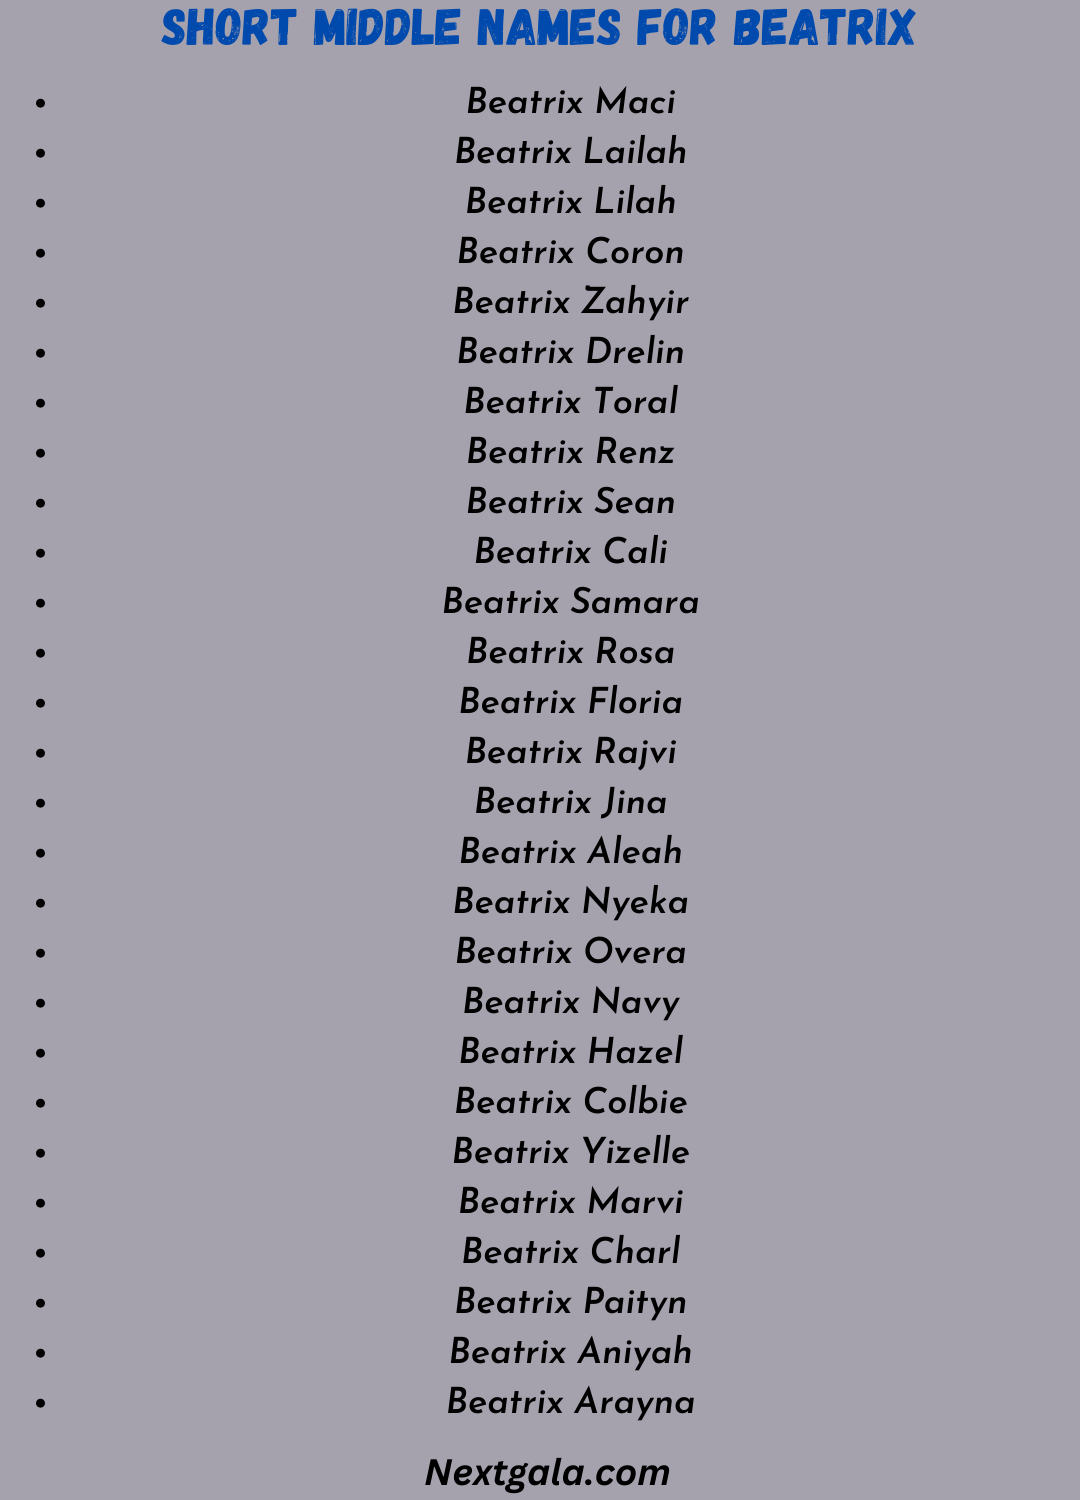 Short Middle Names for Beatrix